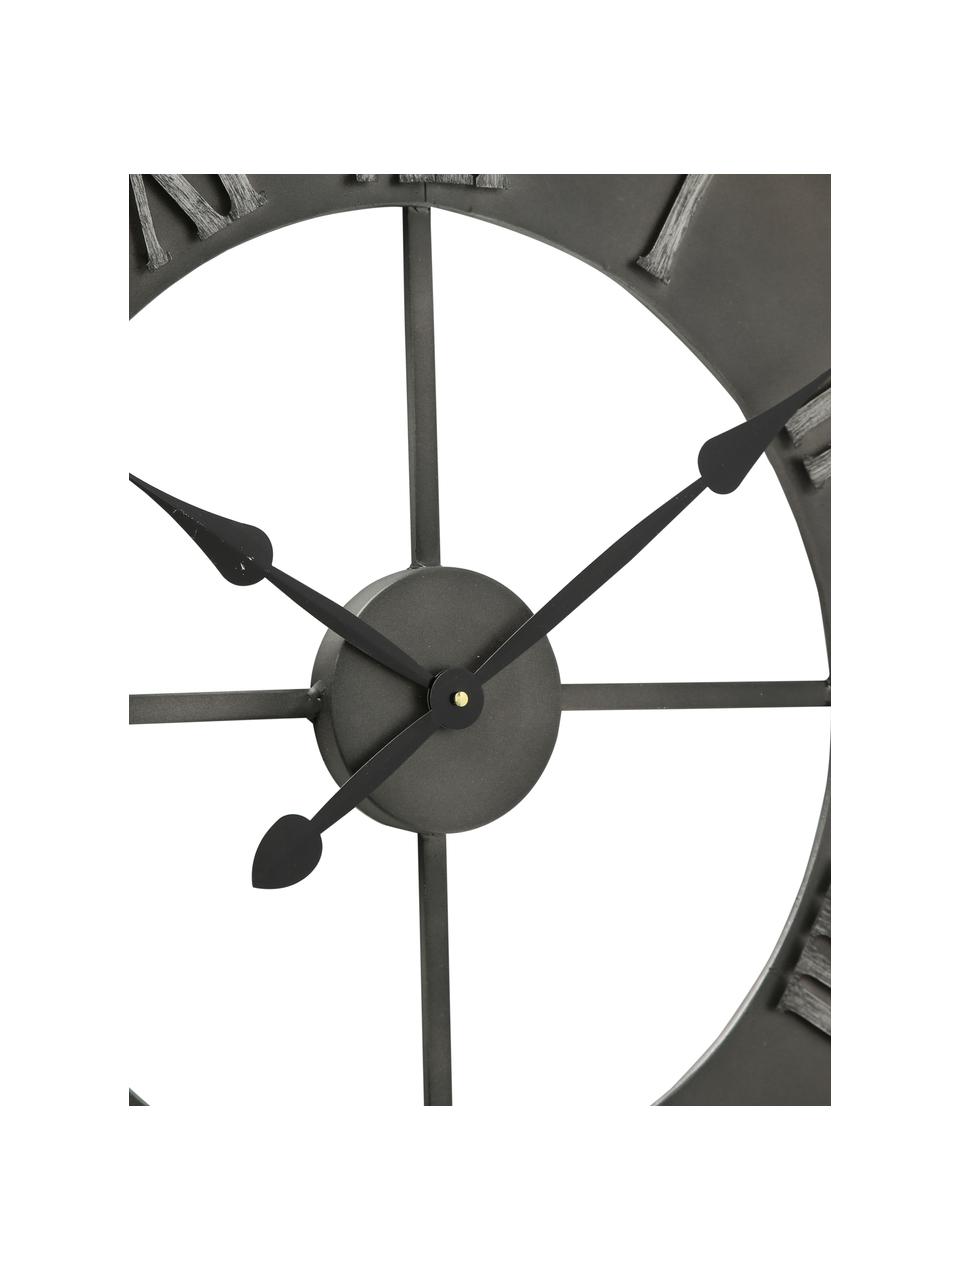 Reloj de pared Duro, Metal recubierto, Gris oscuro, Ø 78 cm